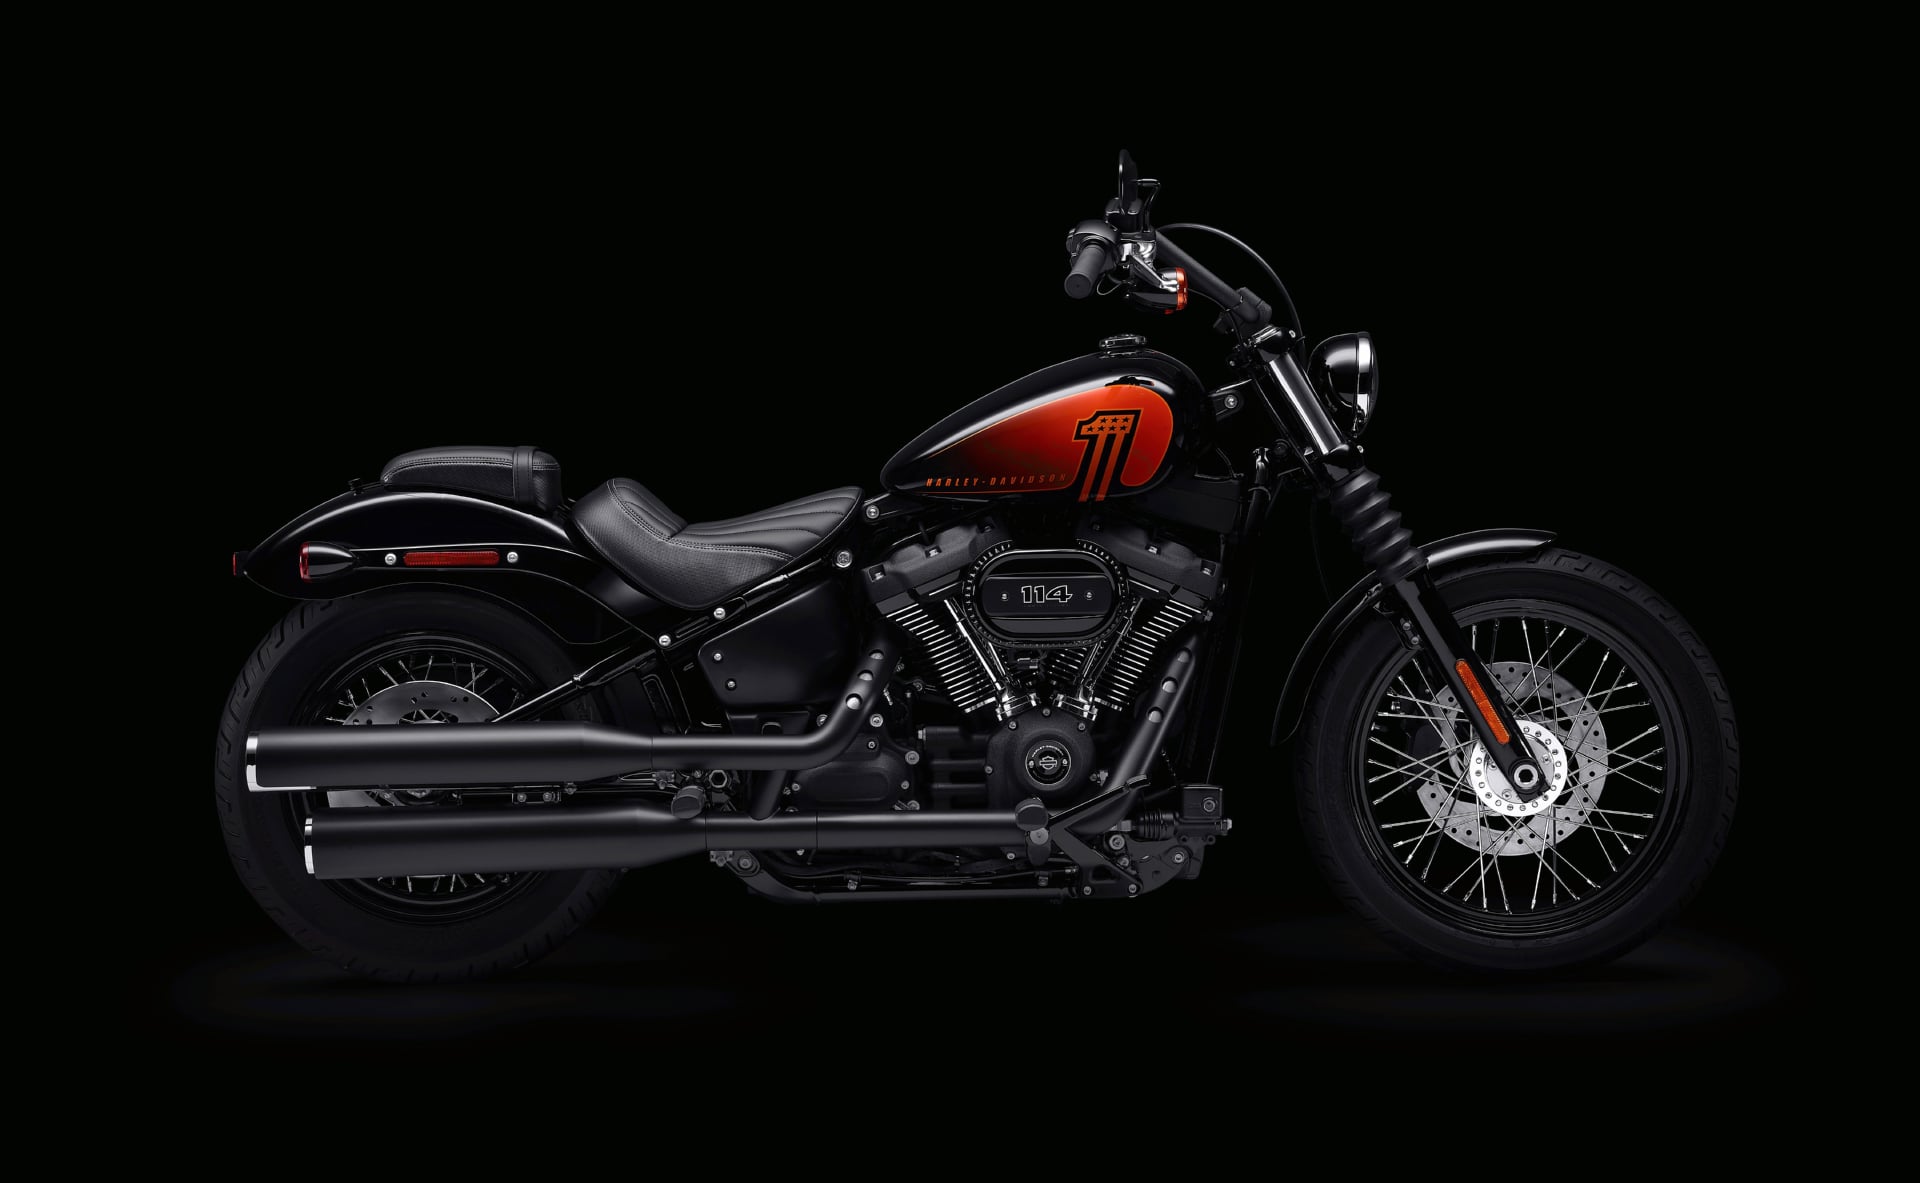 Harley-Davidson Street Bob 114 at 1280 x 960 size wallpapers HD quality